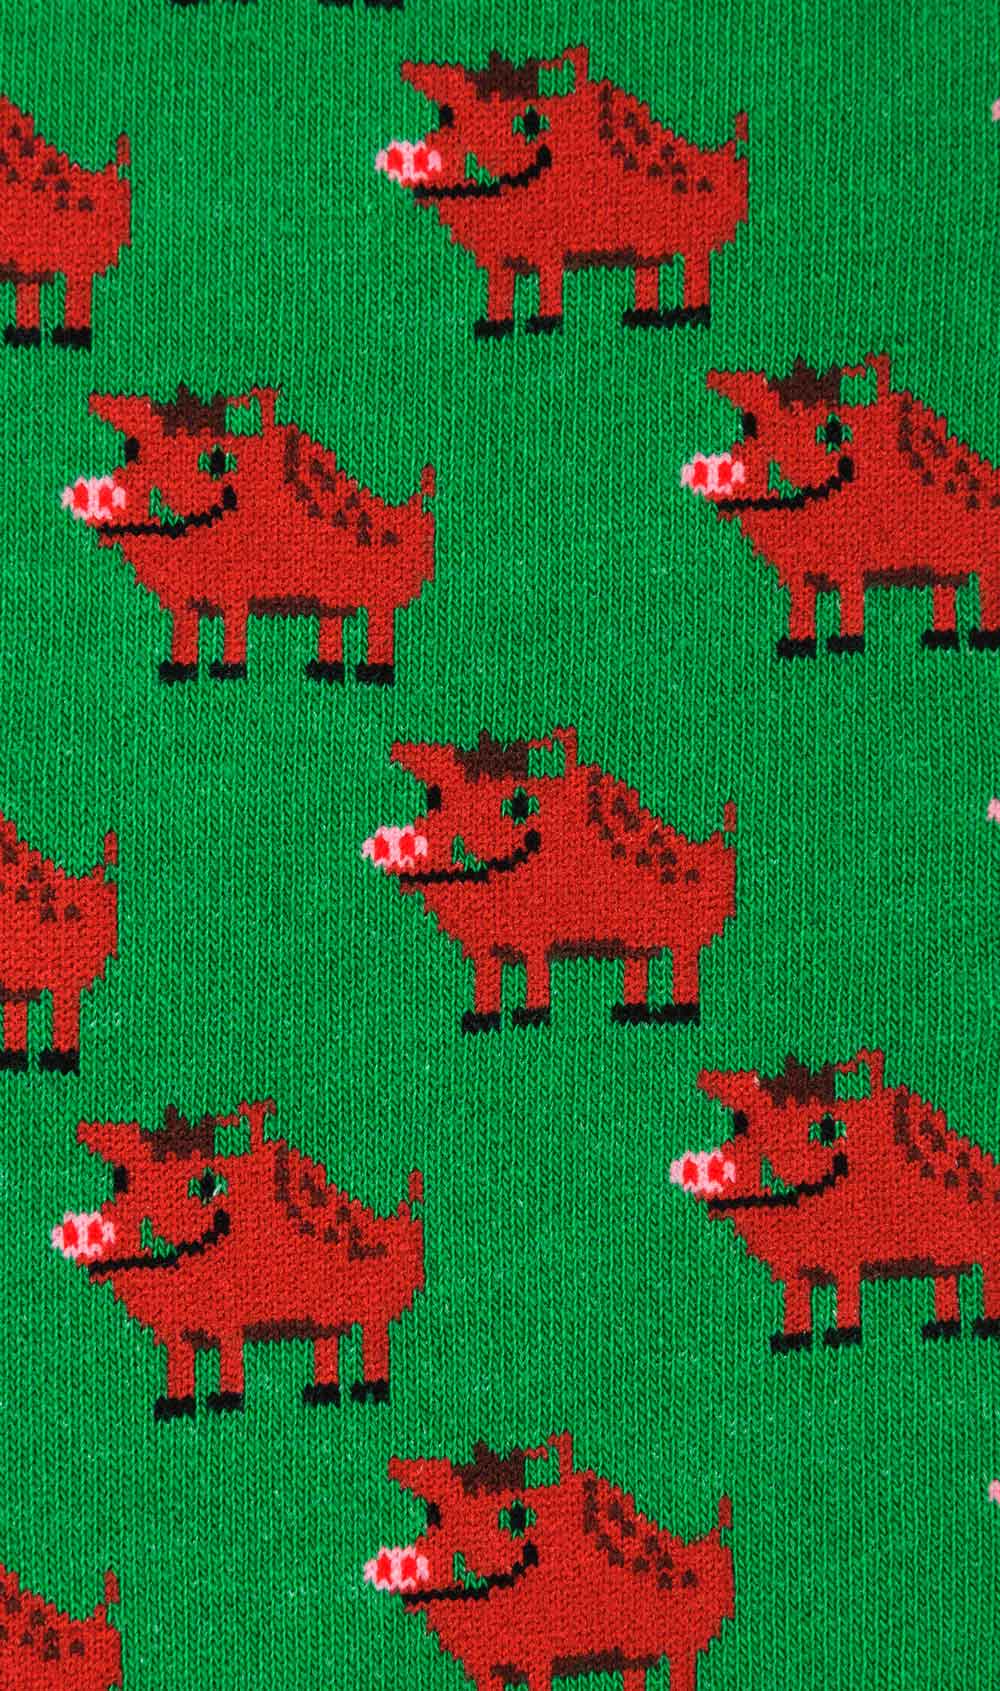 Green Warthog Socks Fabric